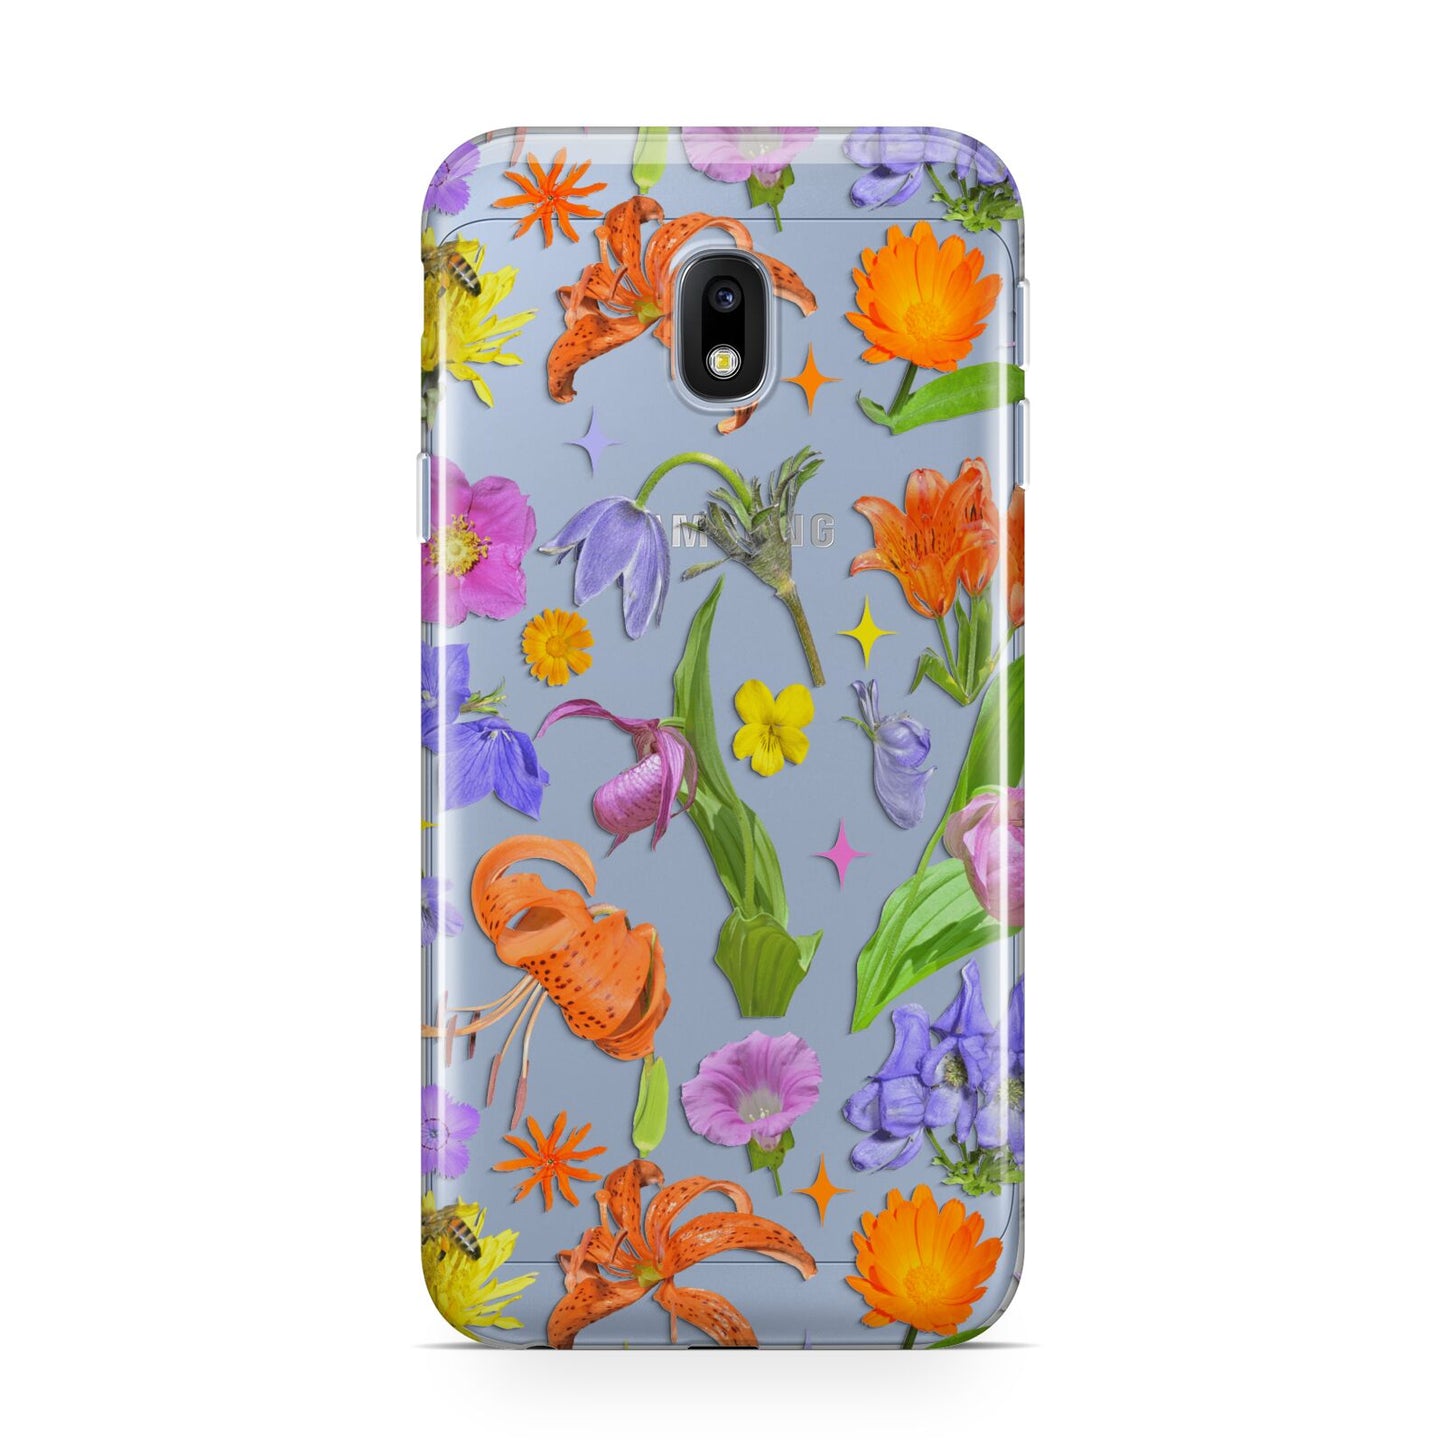 Floral Mix Samsung Galaxy J3 2017 Case